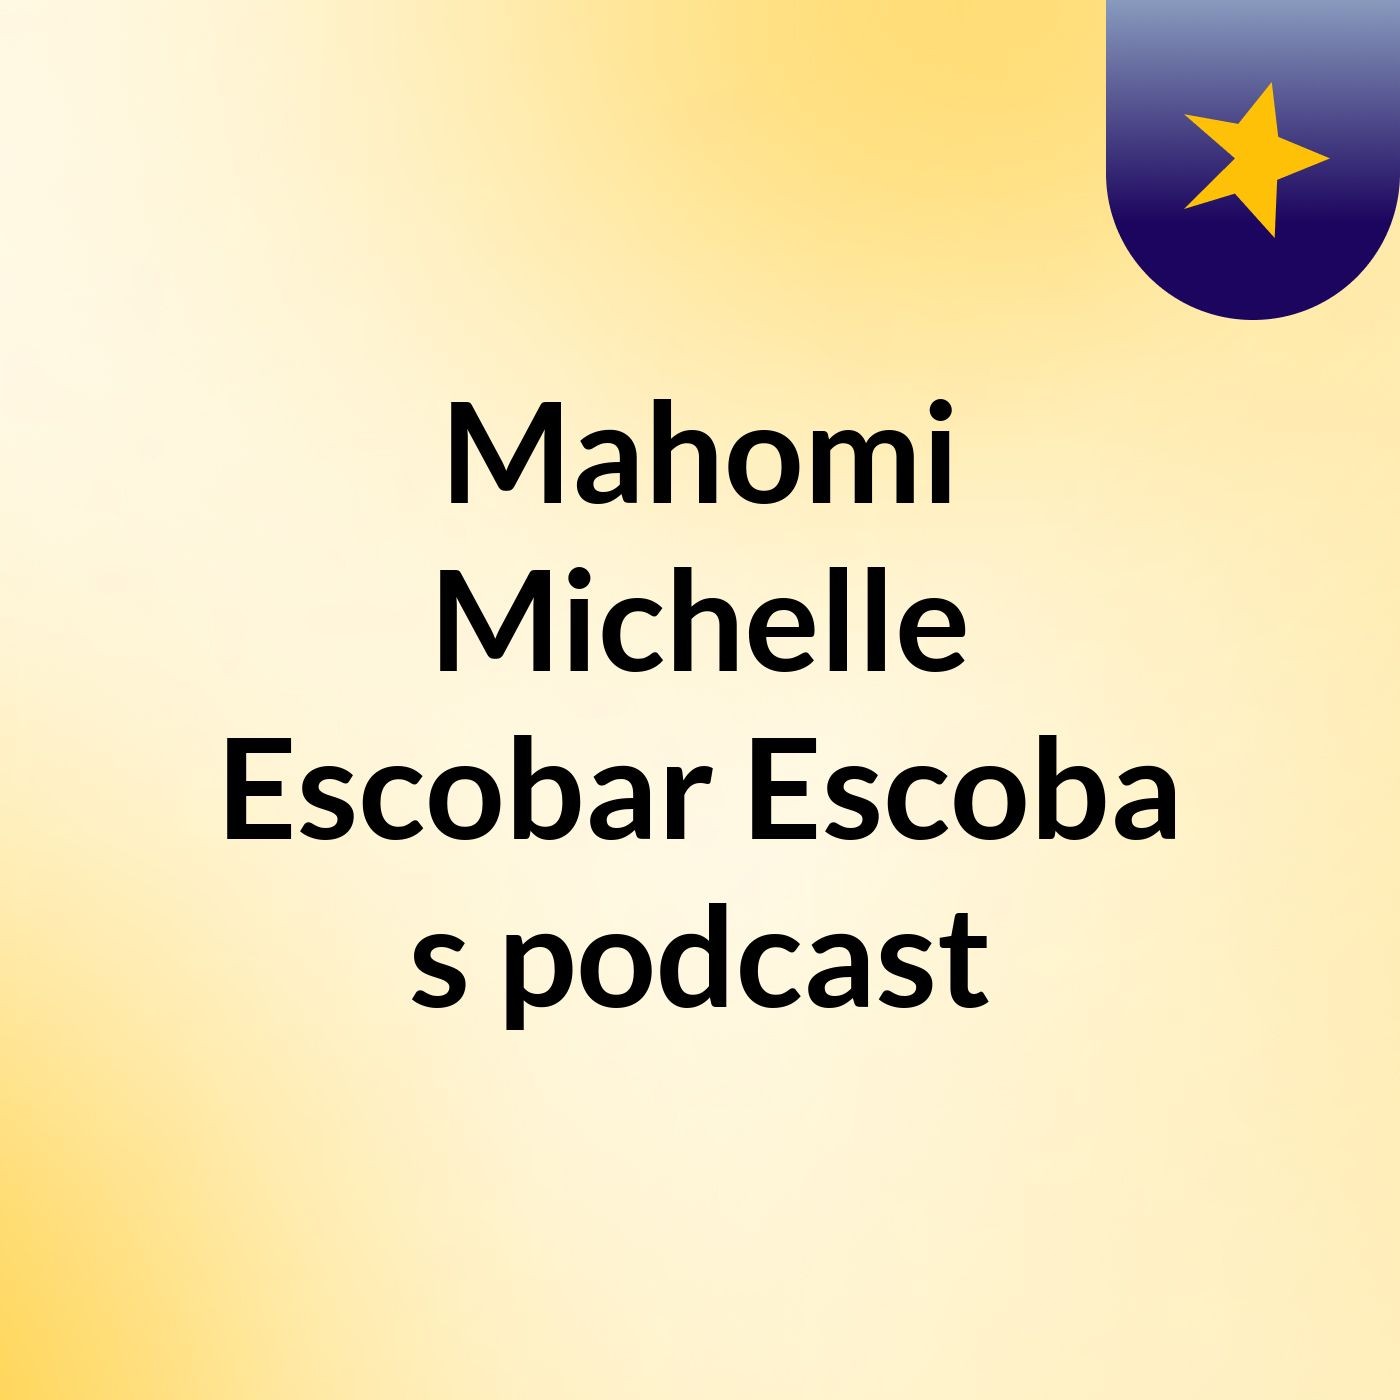 Mahomi Michelle Escobar Escoba's podcast